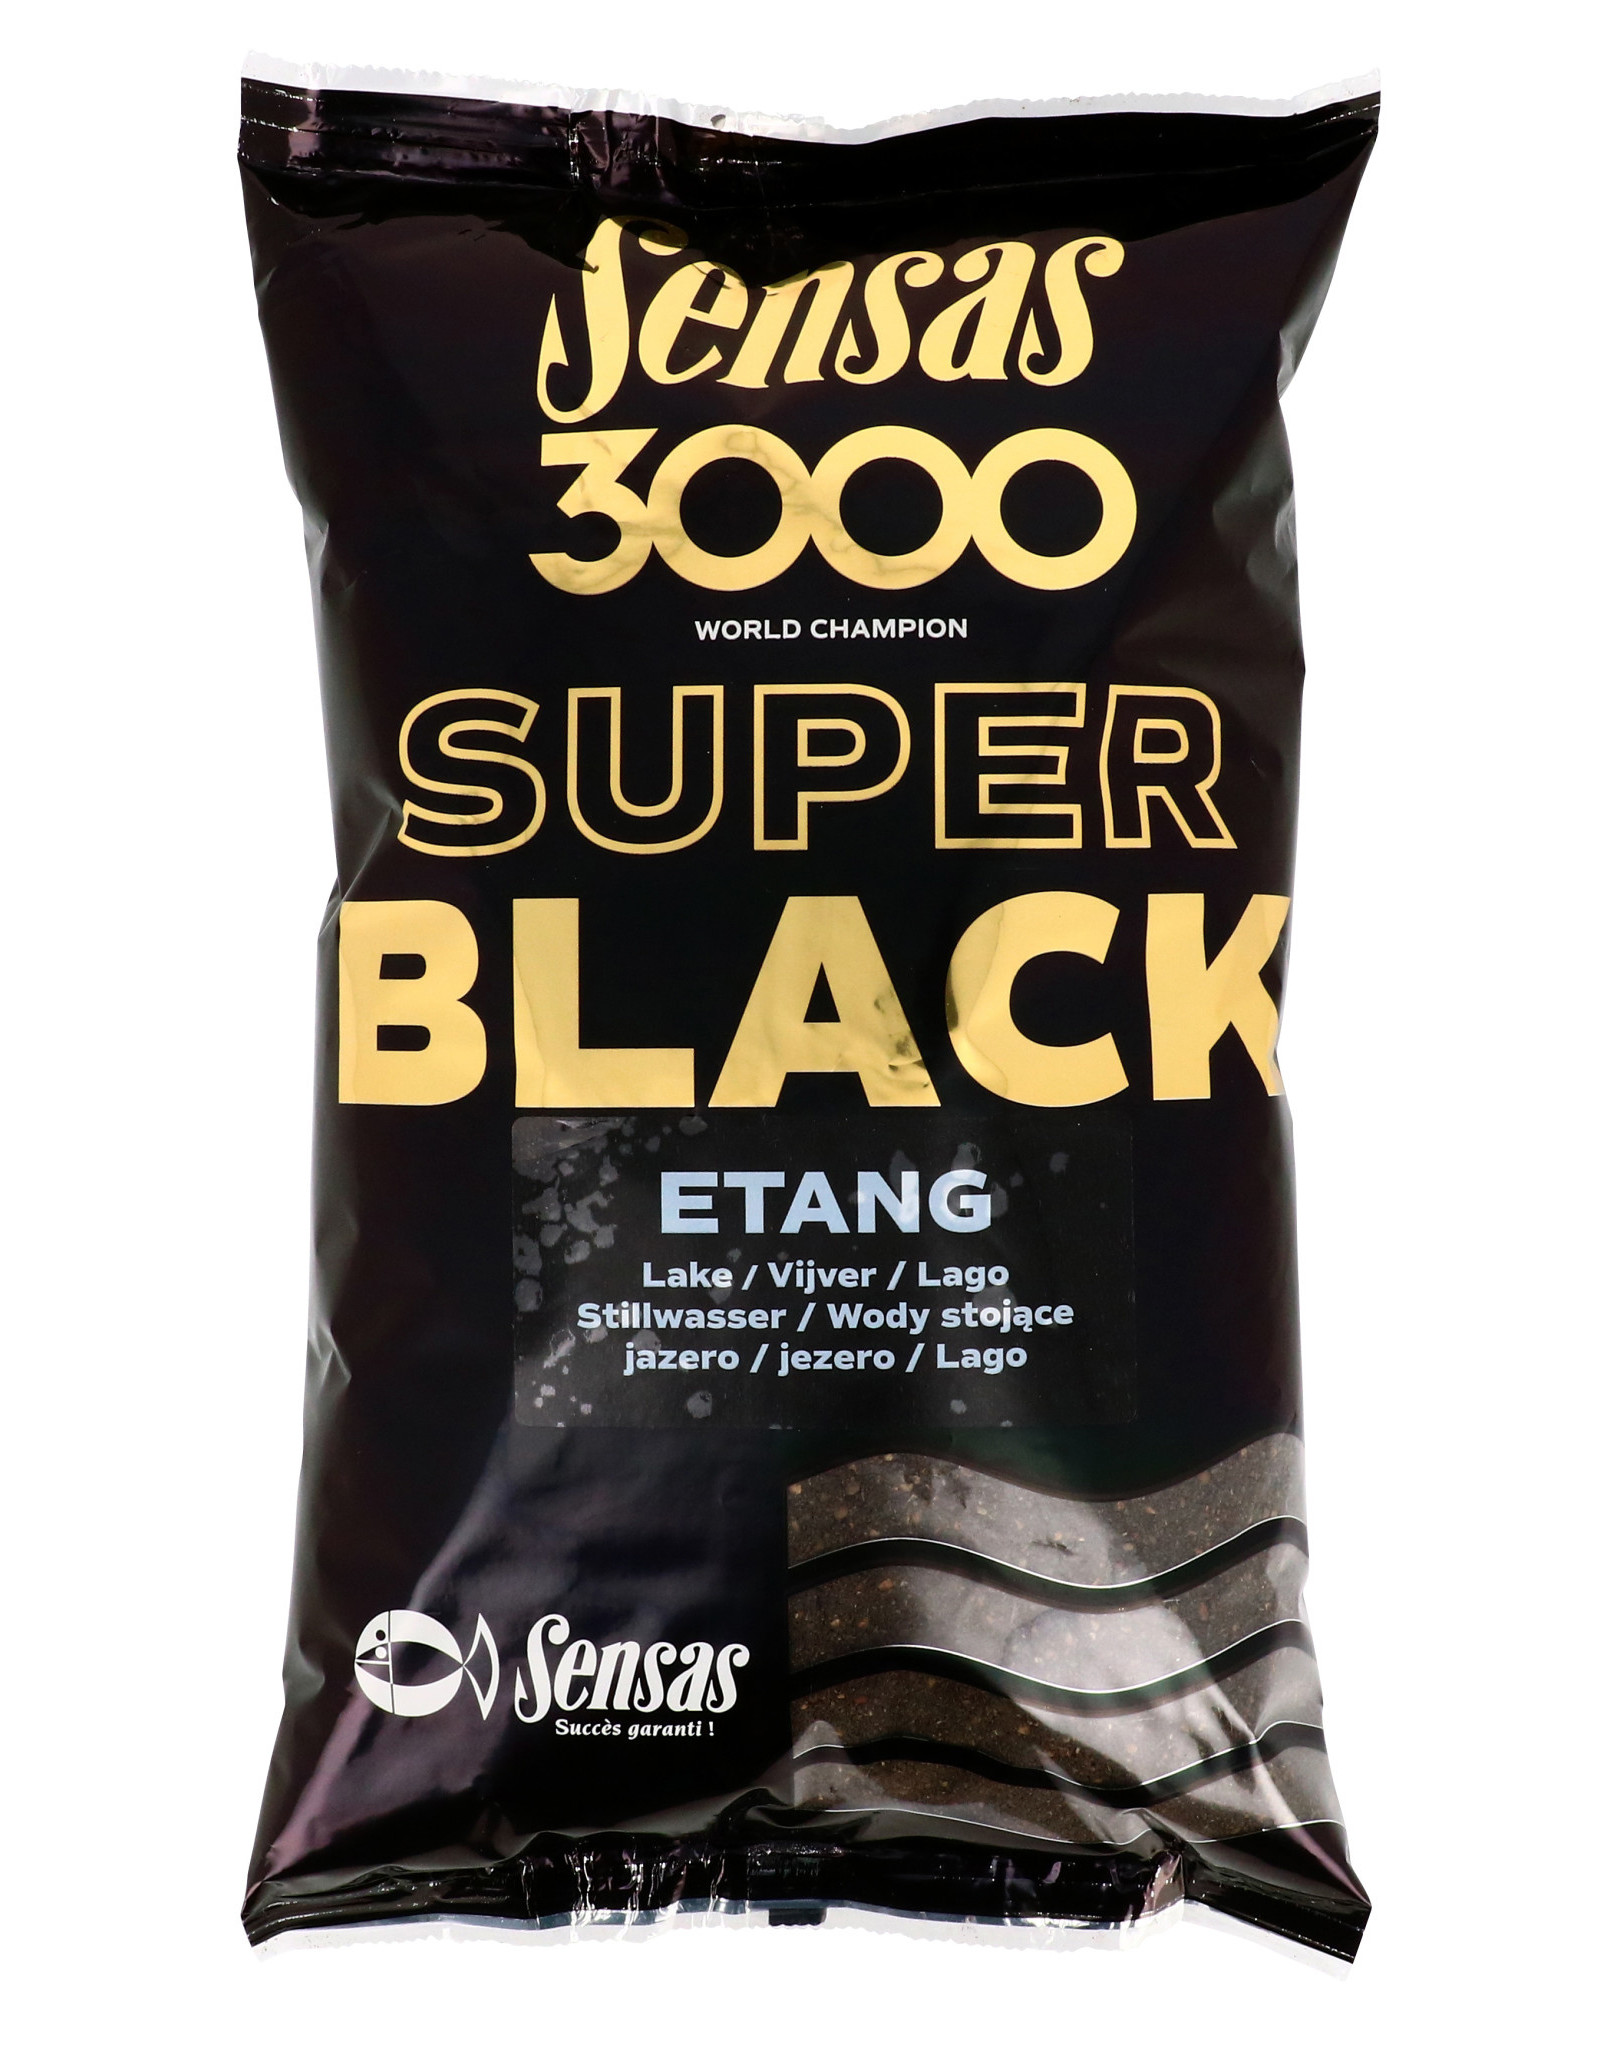 Sensas 3000 SUPER BLACK ETANG (VIJVER) 1KG